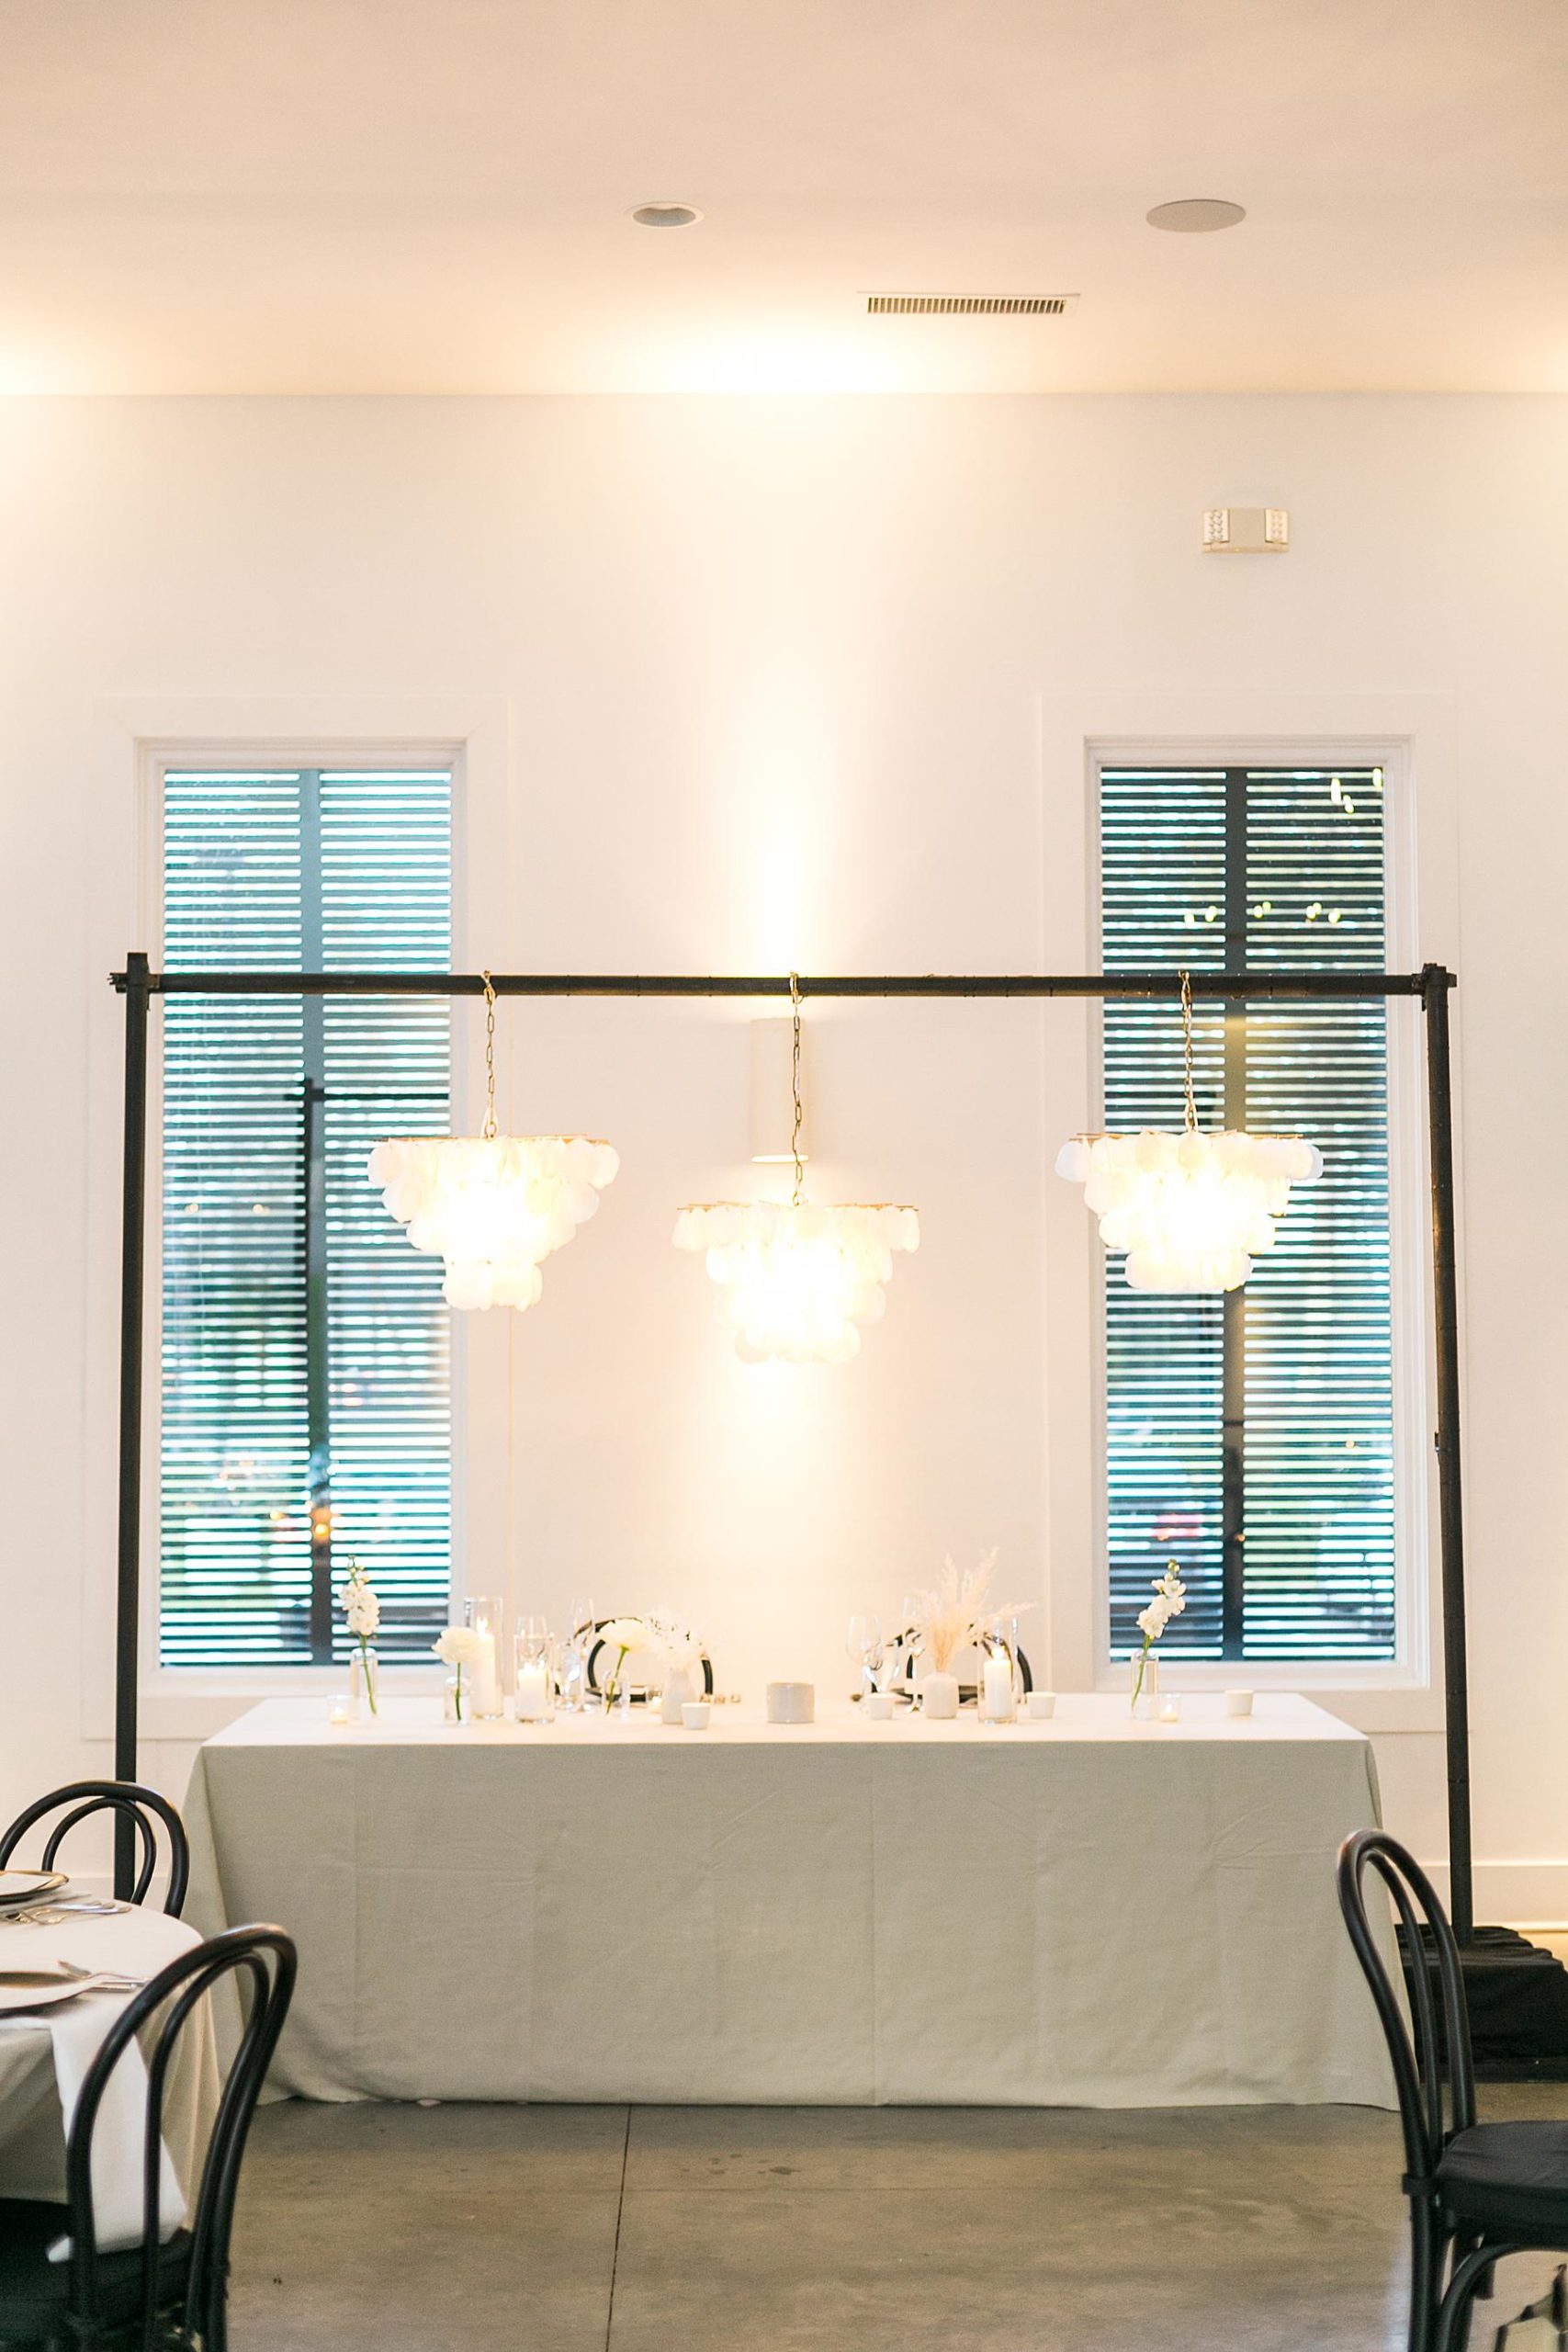 black and white elegant boho reception table decor at hutton house wedding venue in minneapolis minnesota